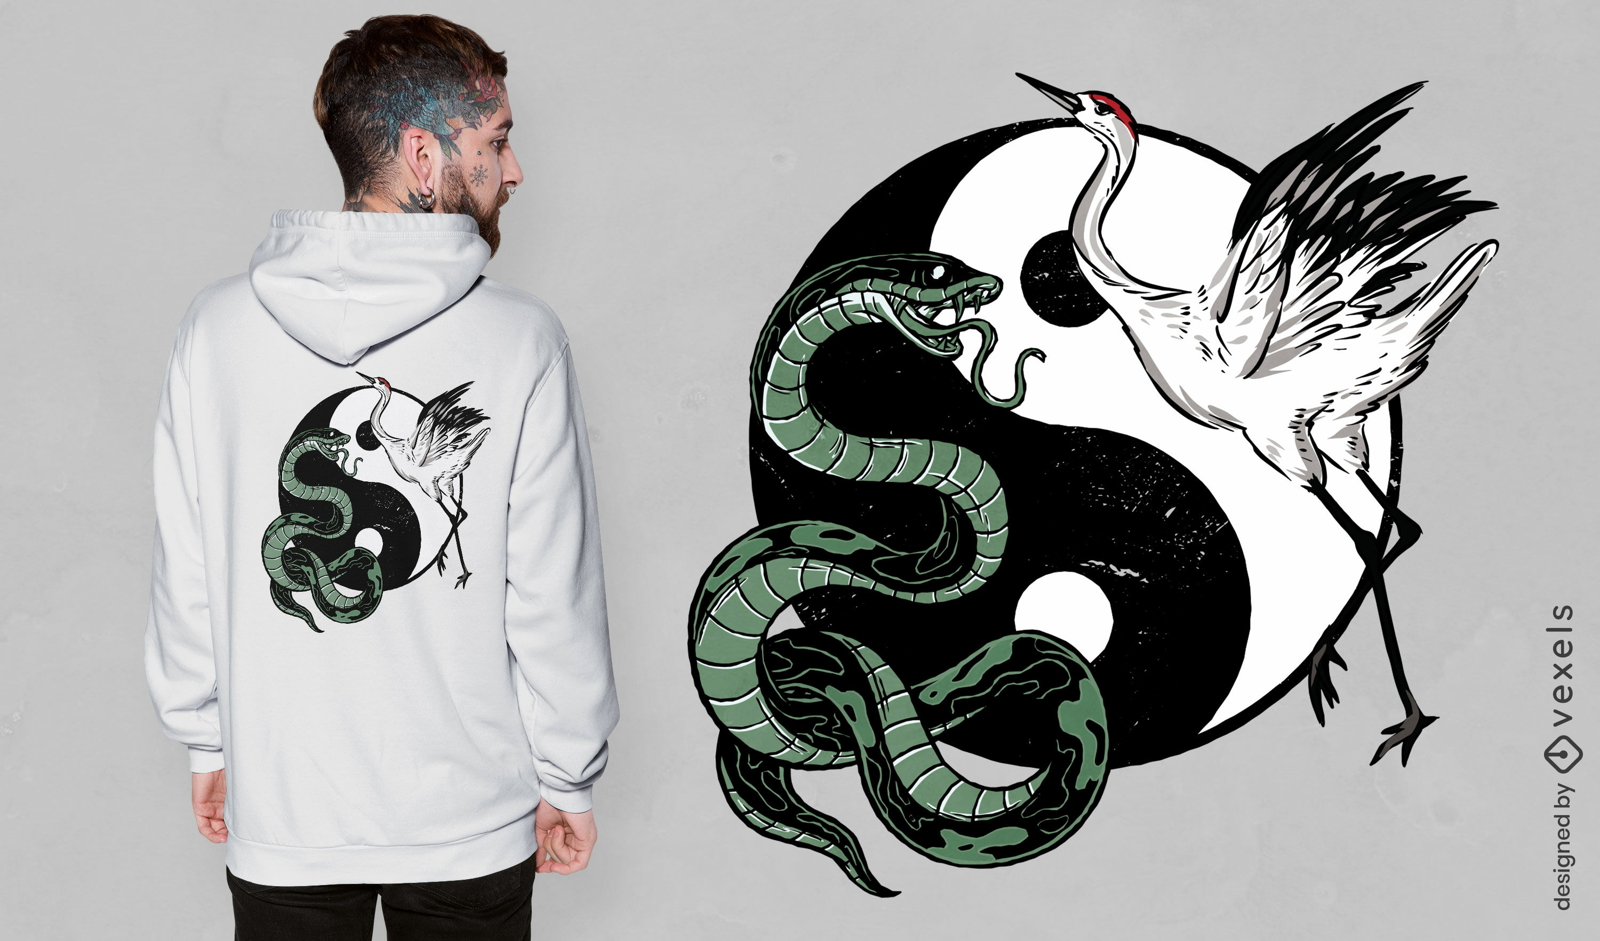 Yin yang snake and crane t-shirt design